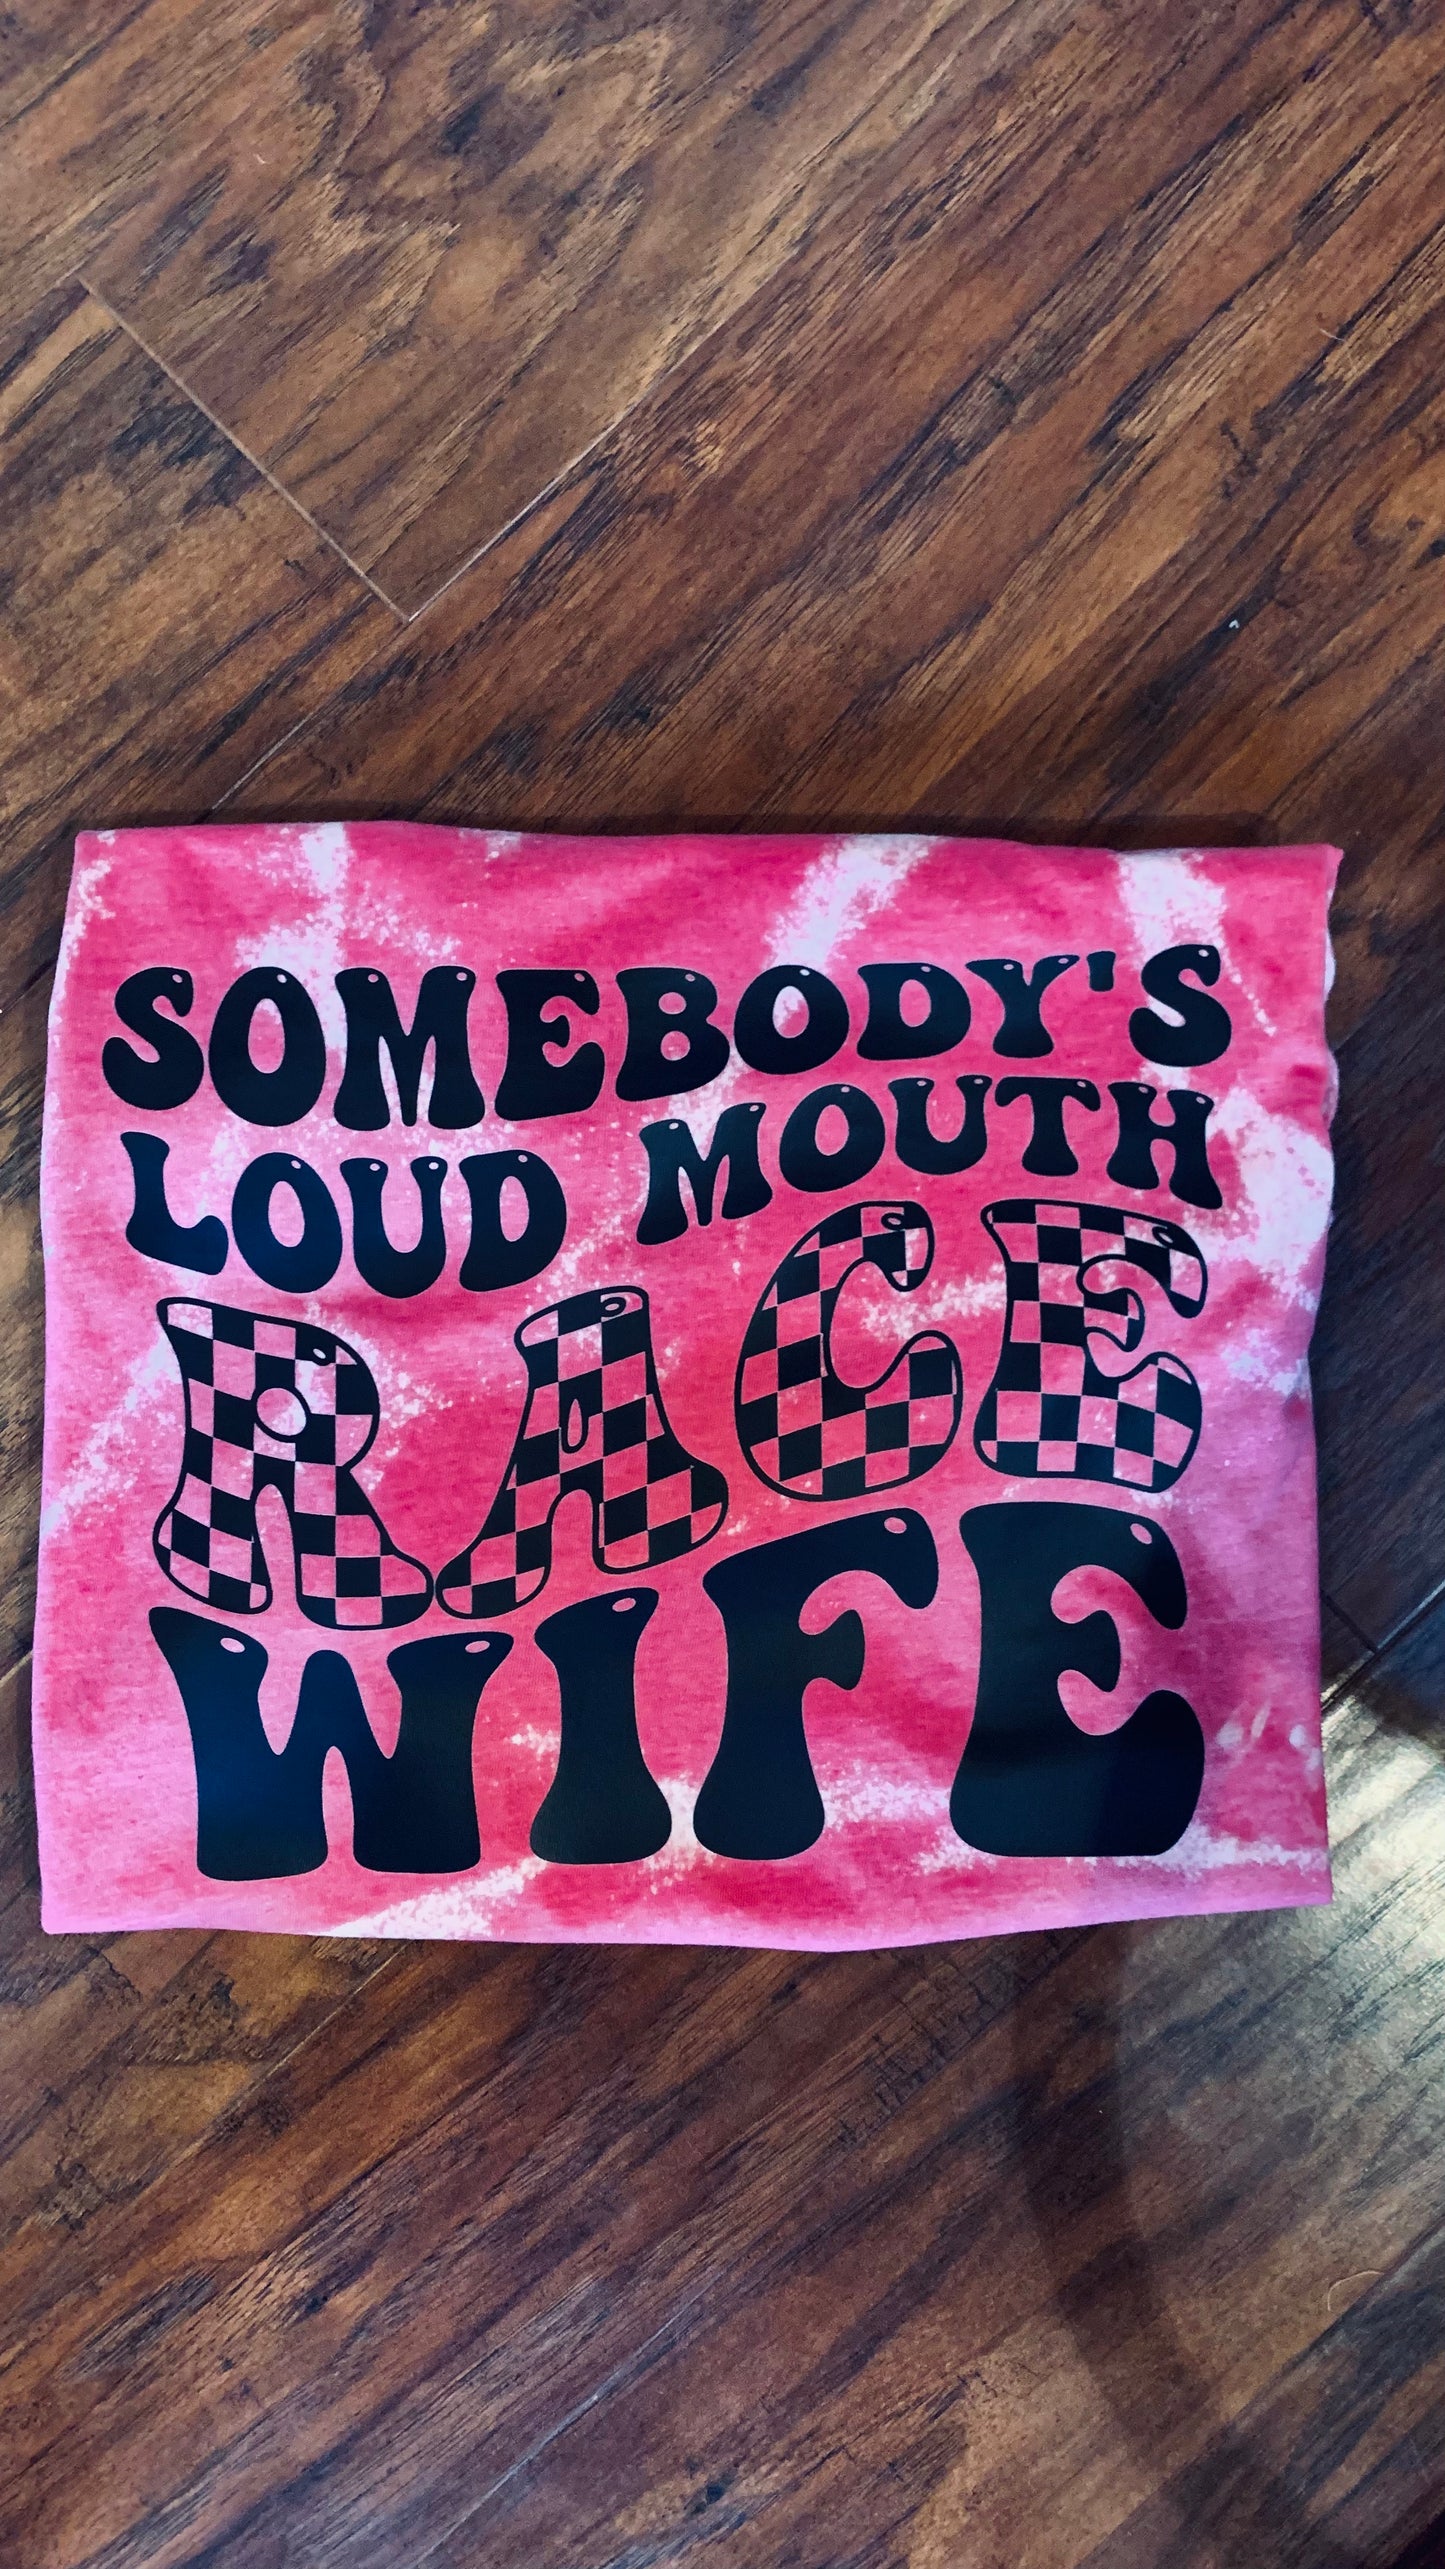 Somebody’s loud a** race wife